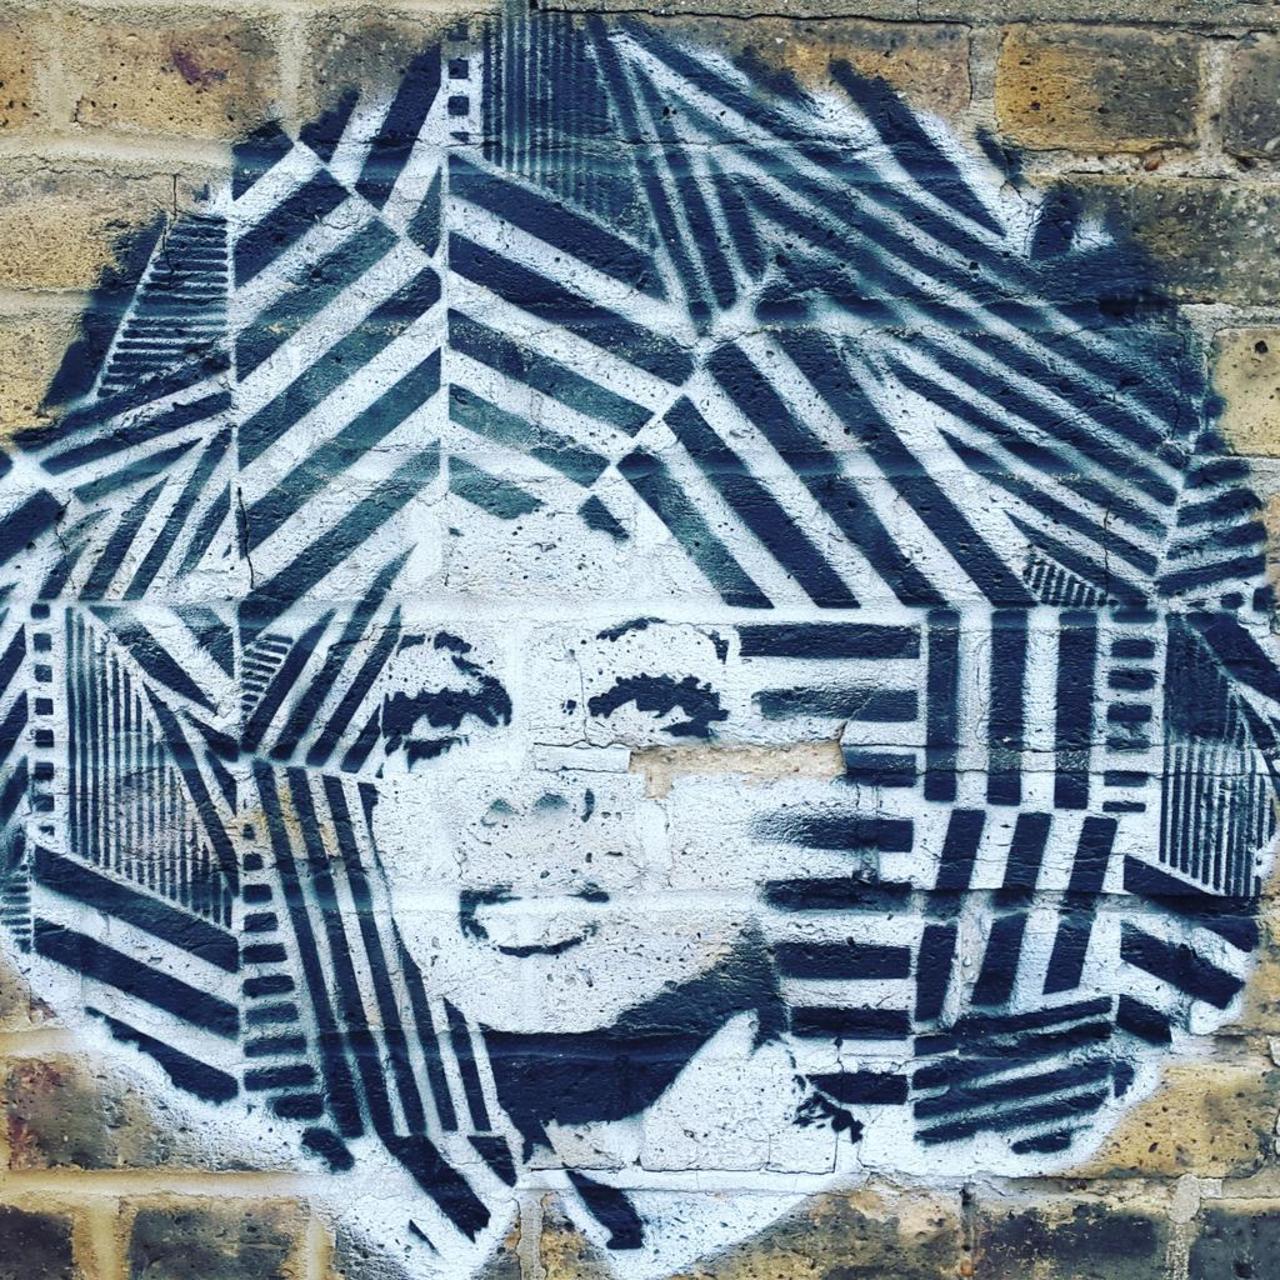 Stay inspired http://www.faceyourspacestudio.co.uk #art #graffiti #graff #walking #streetart  #urbanart #sprayart  #spraycanart https://t.co/nk5F3Cc7oB